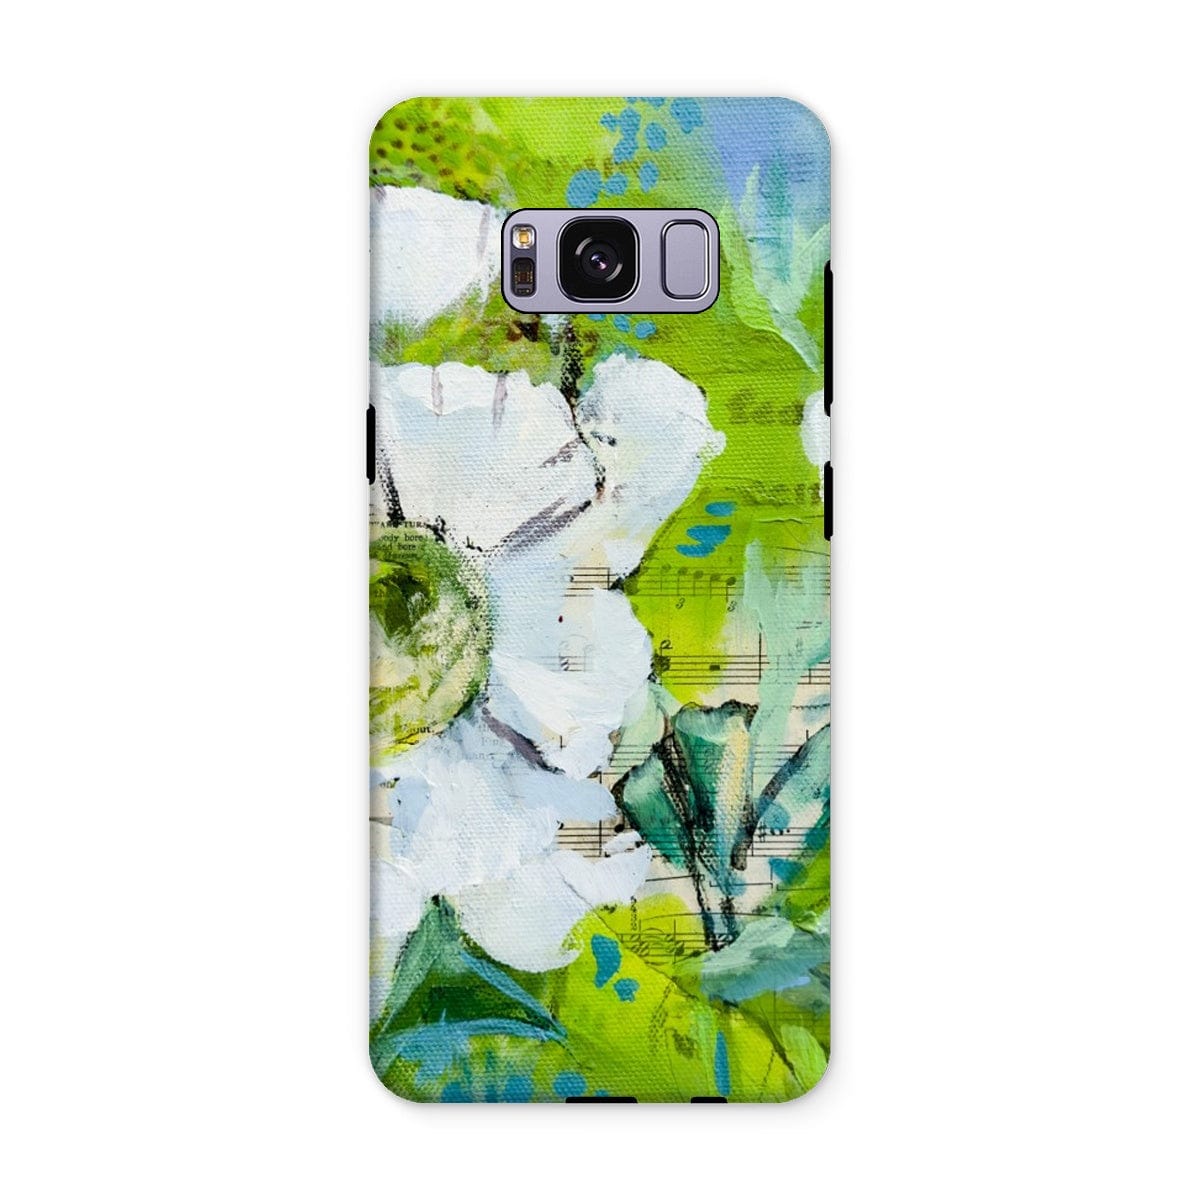 Prodigi Phone & Tablet Cases Samsung Galaxy S8 Plus / Gloss Flower Music Series Anemone Print Tough Phone Case